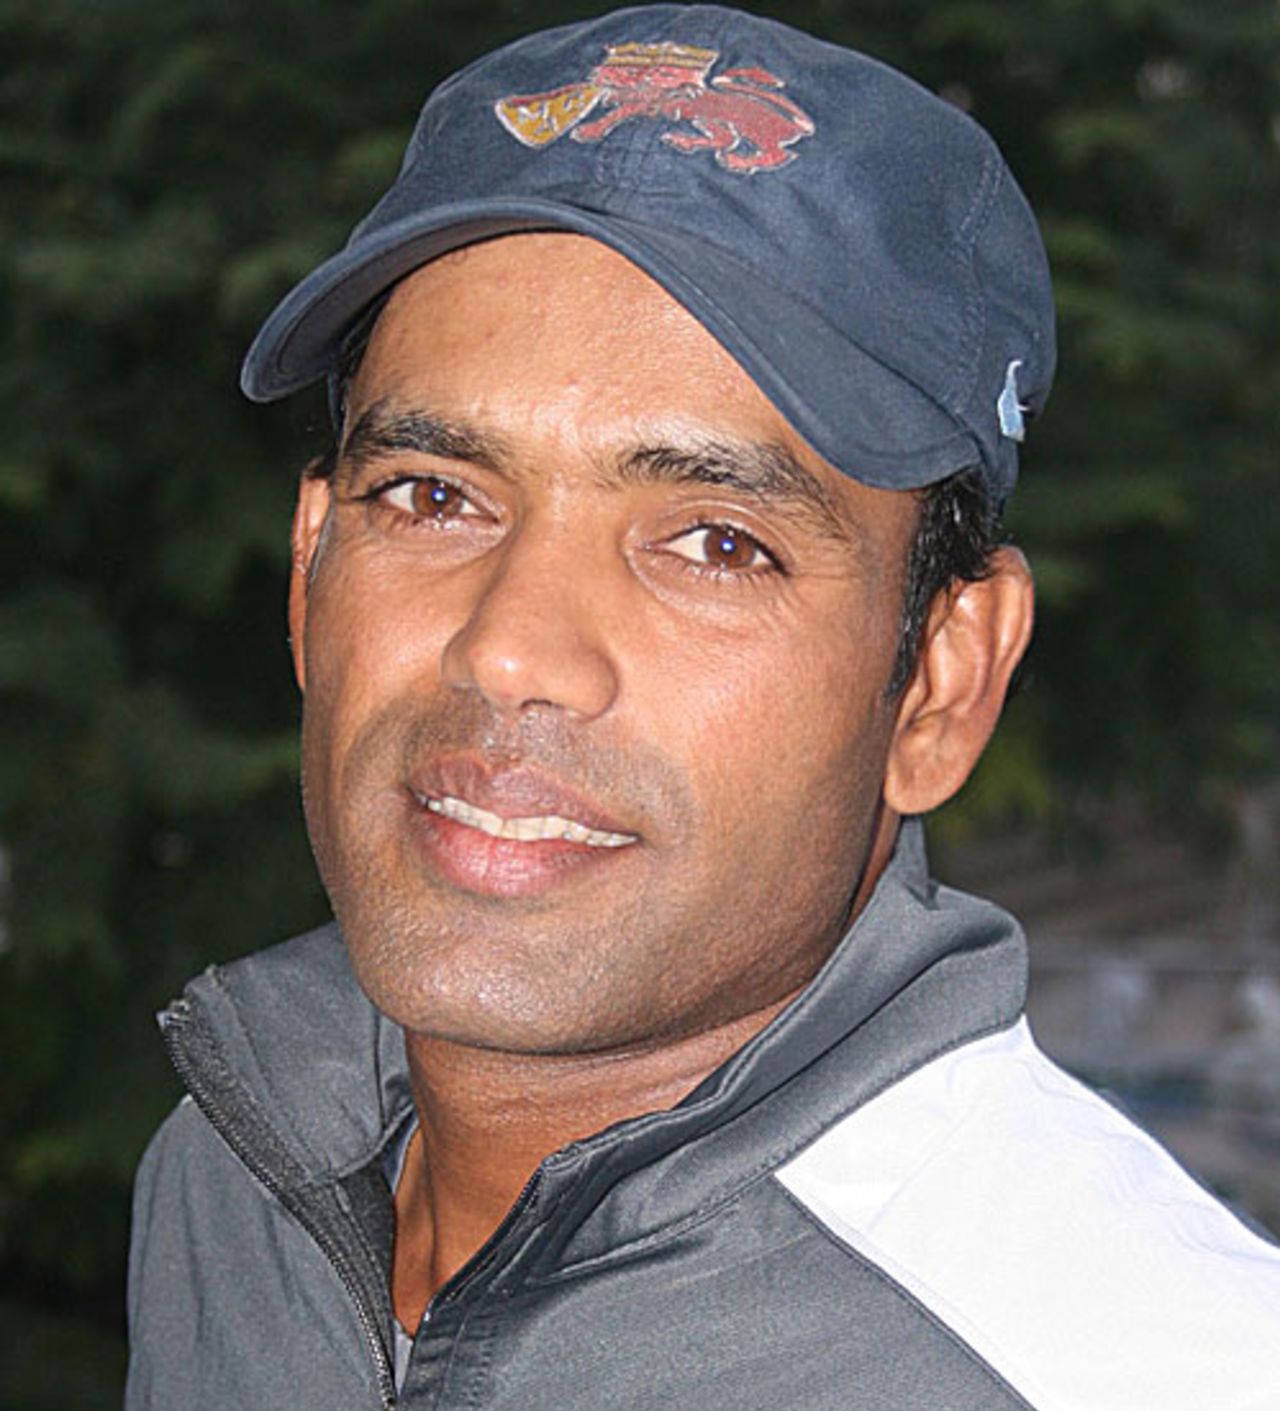 Vinayak Samant, player portrait, November 2009